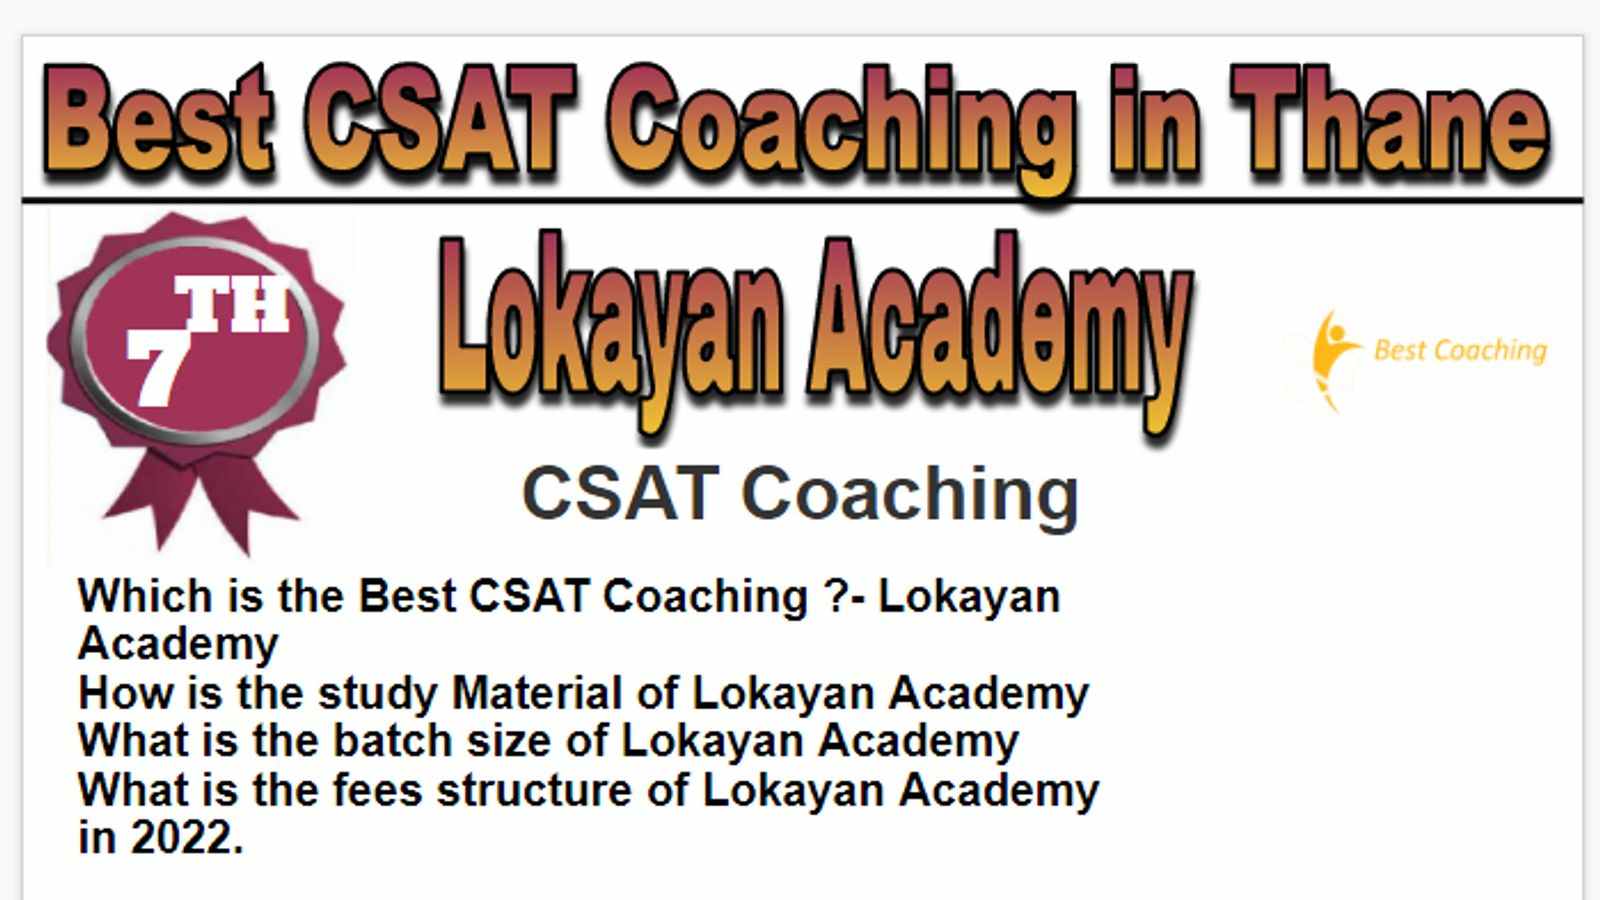 Rank 7 Best CSAT Coaching in Thane